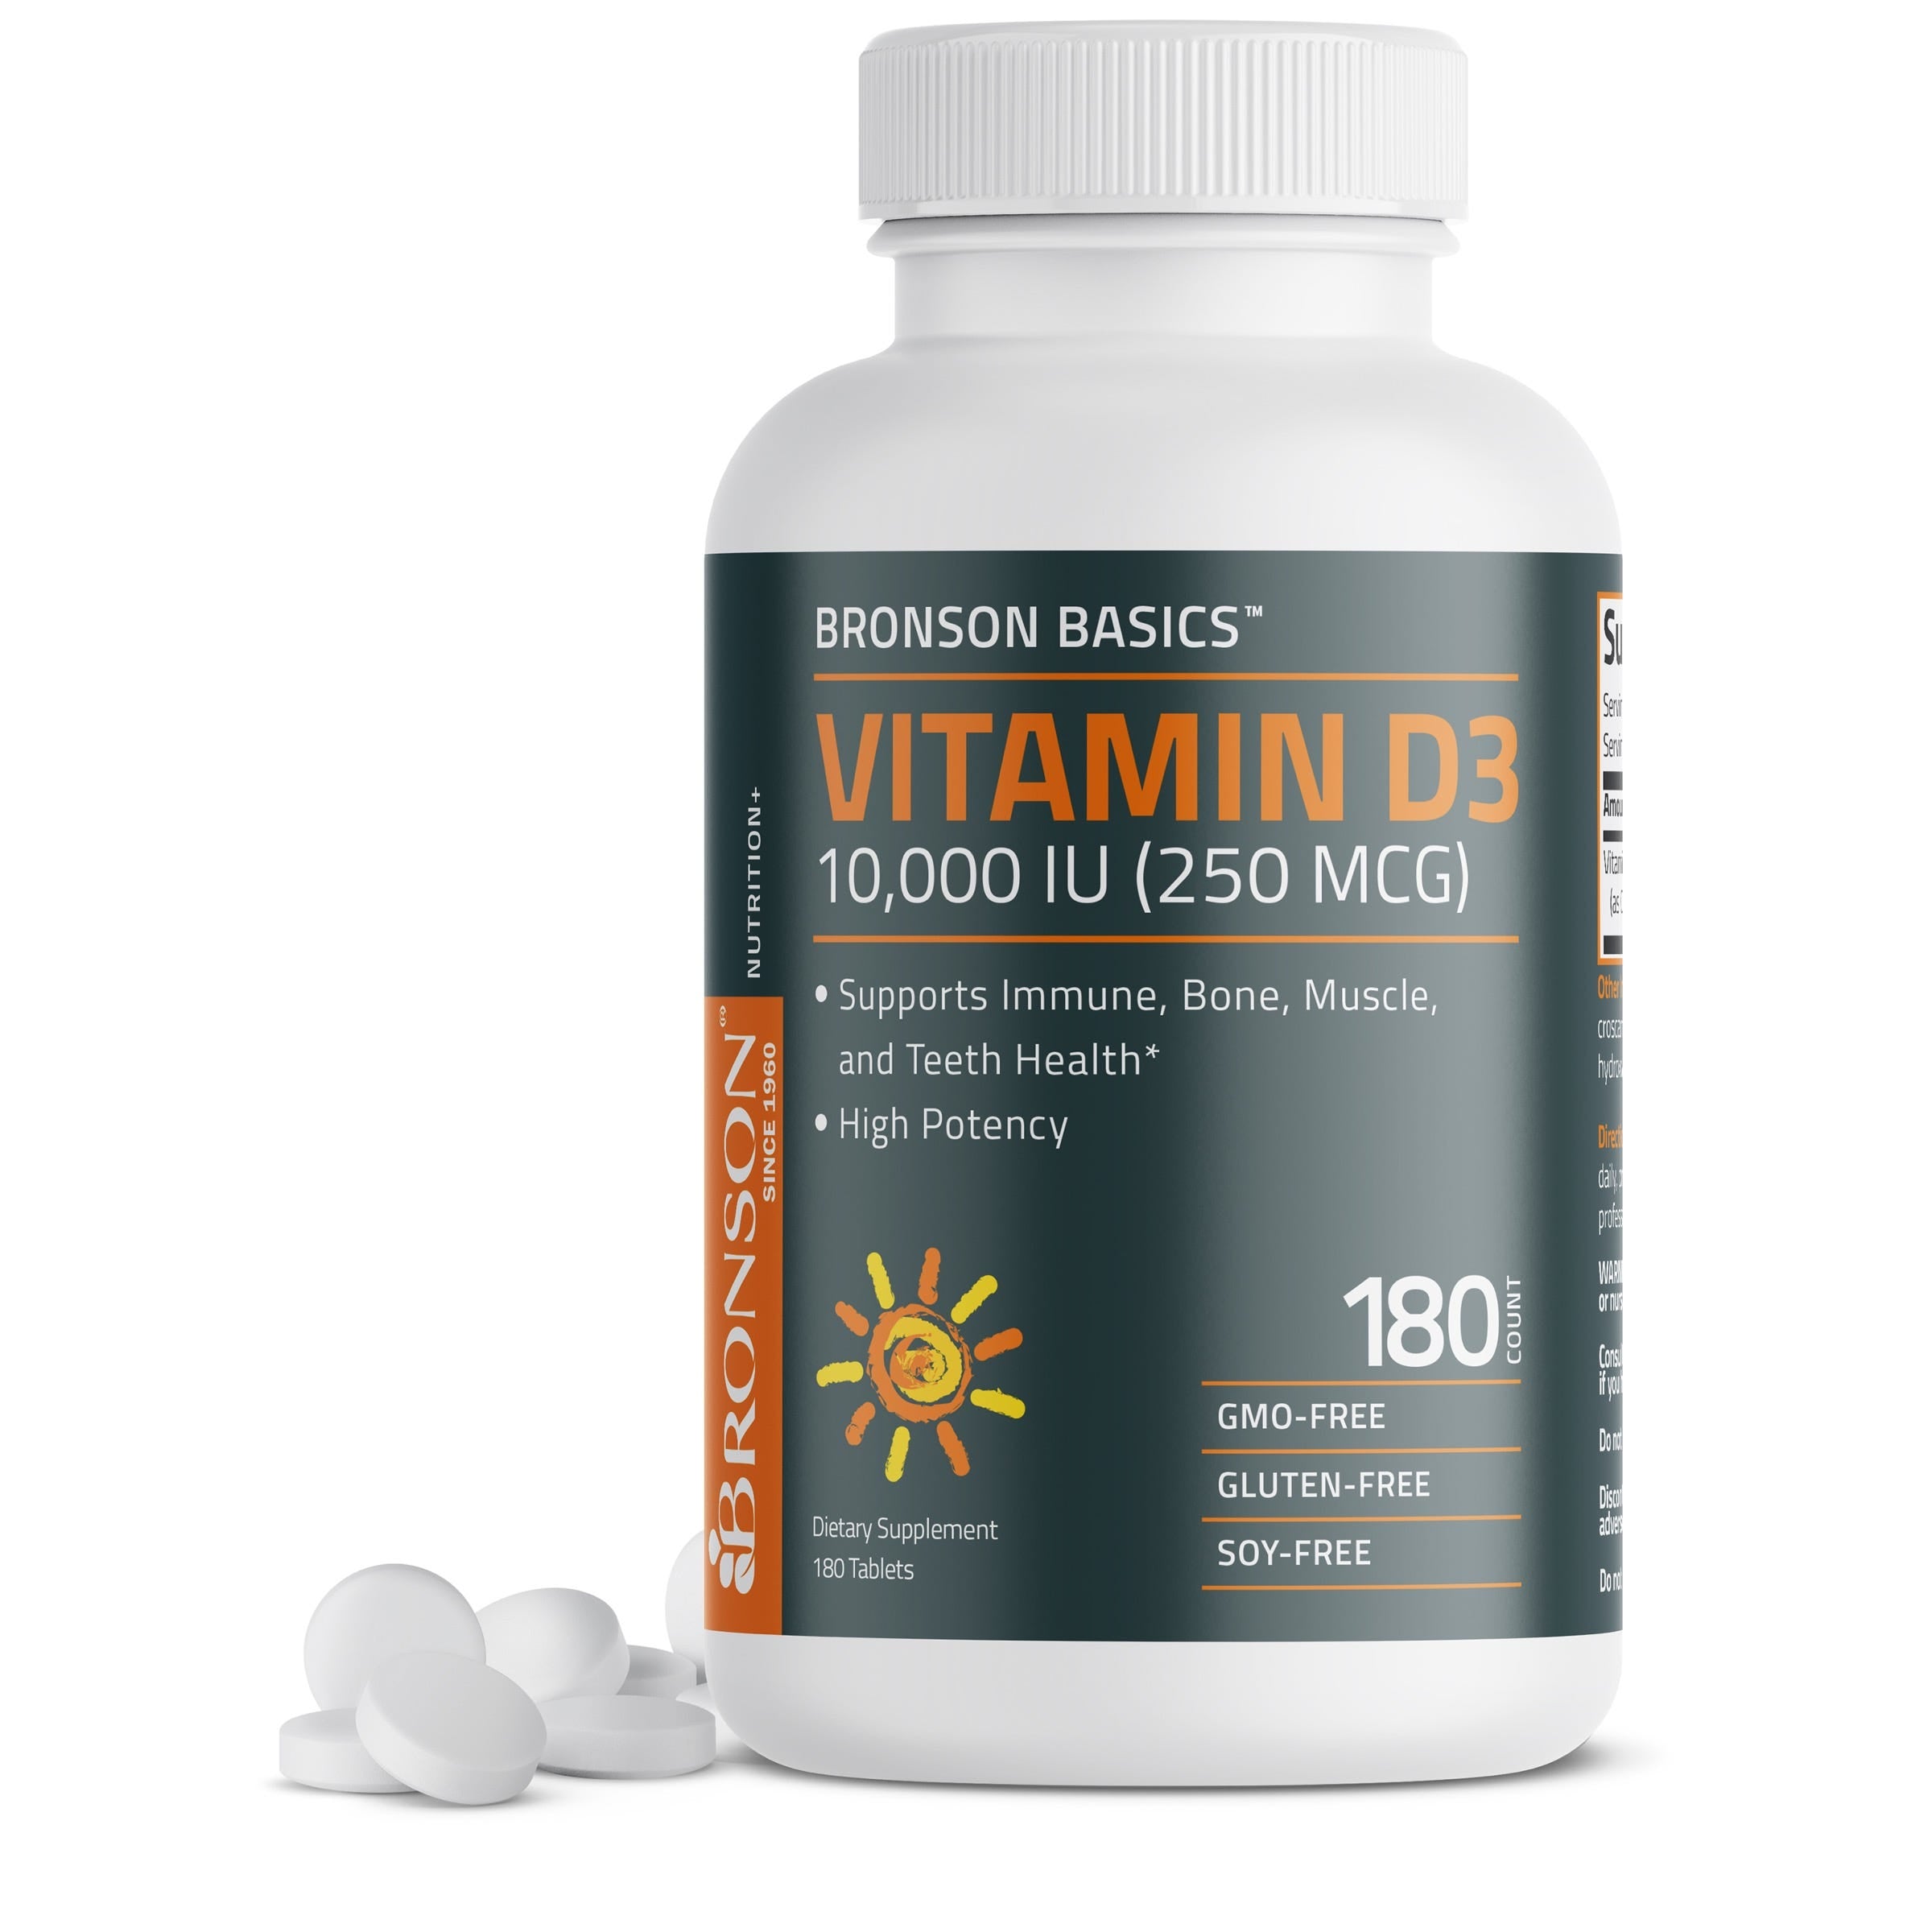 Vitamin D3 10,000 IU (250 MCG) view 1 of 6